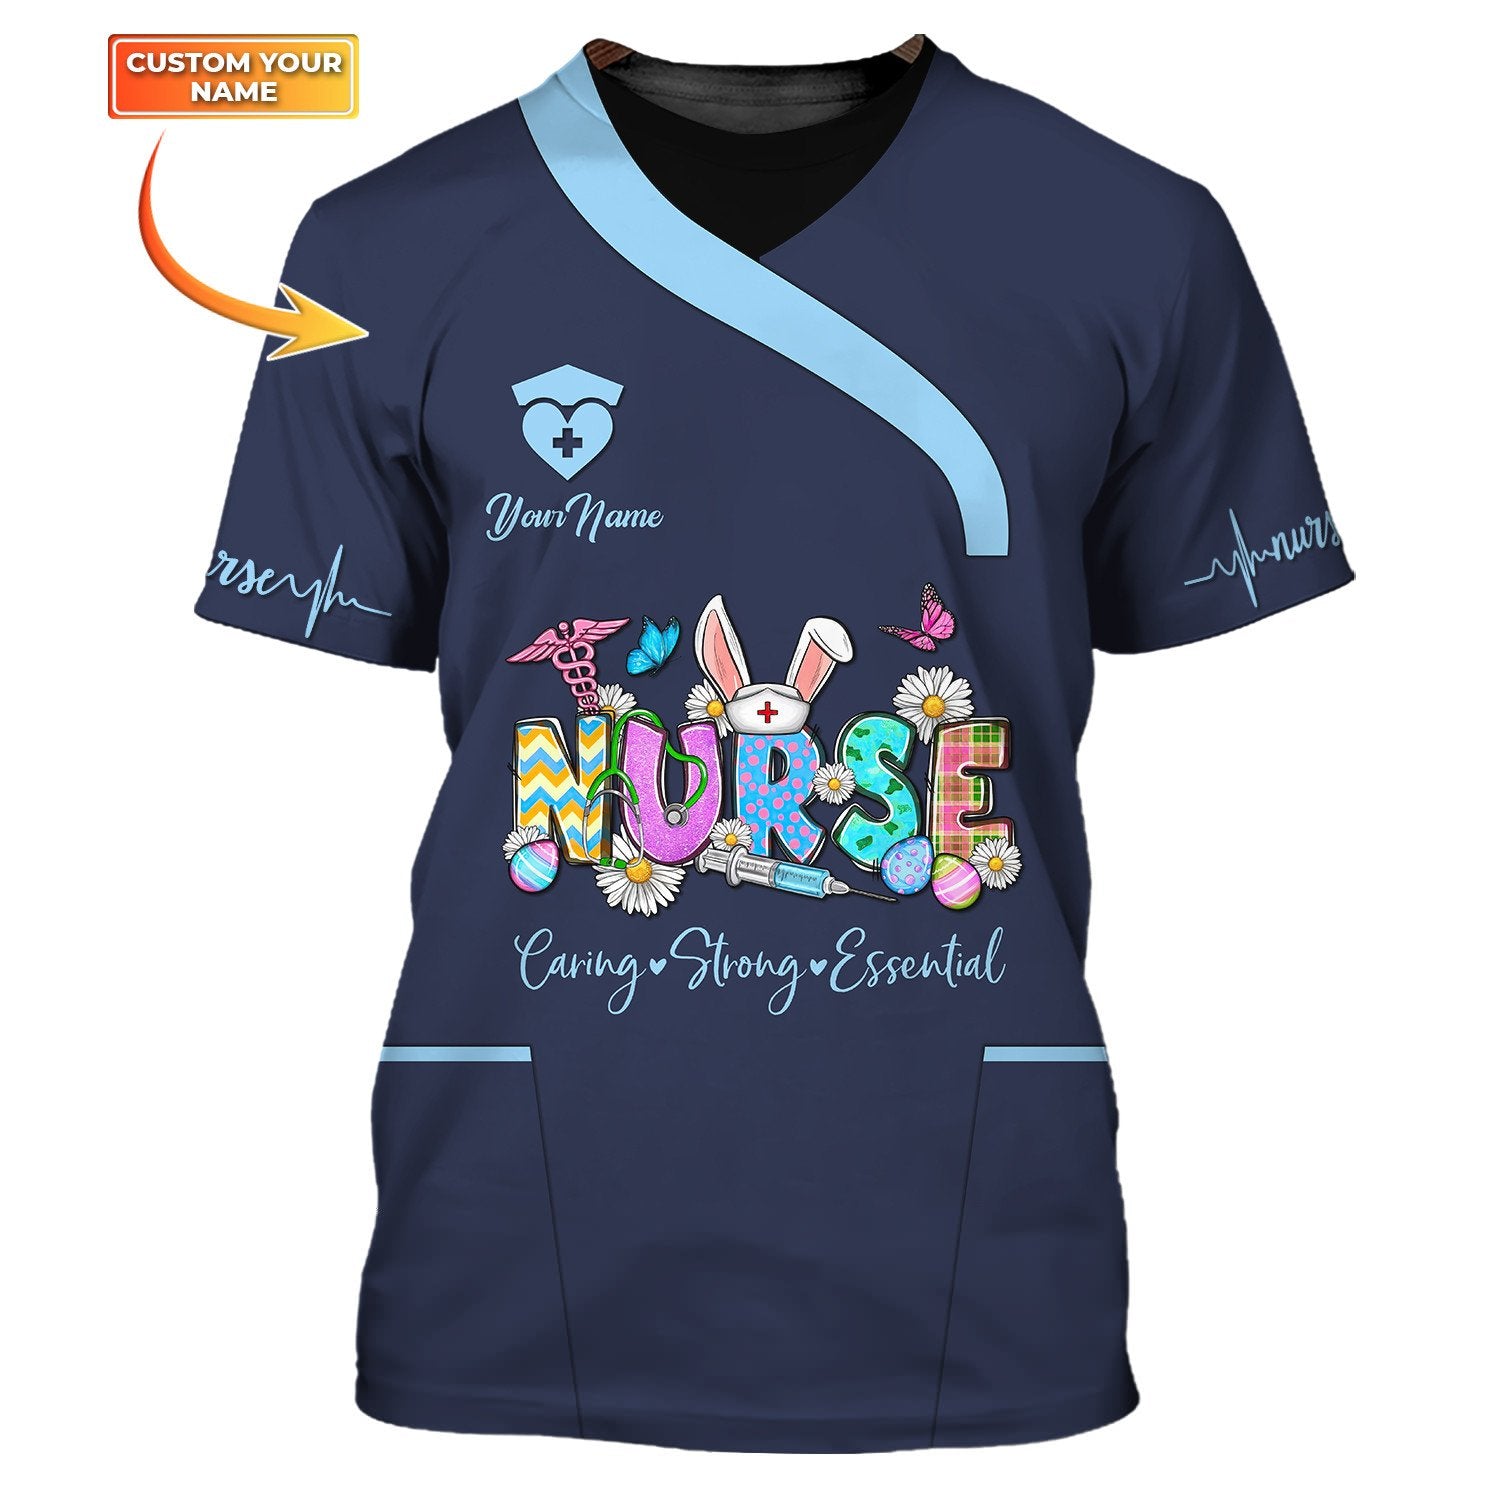 Nurse Earing Strong Essential Tee Shirt Custom Nurse Uniform/ Nurse Easter Day Shirt/ Idea Gift for Her